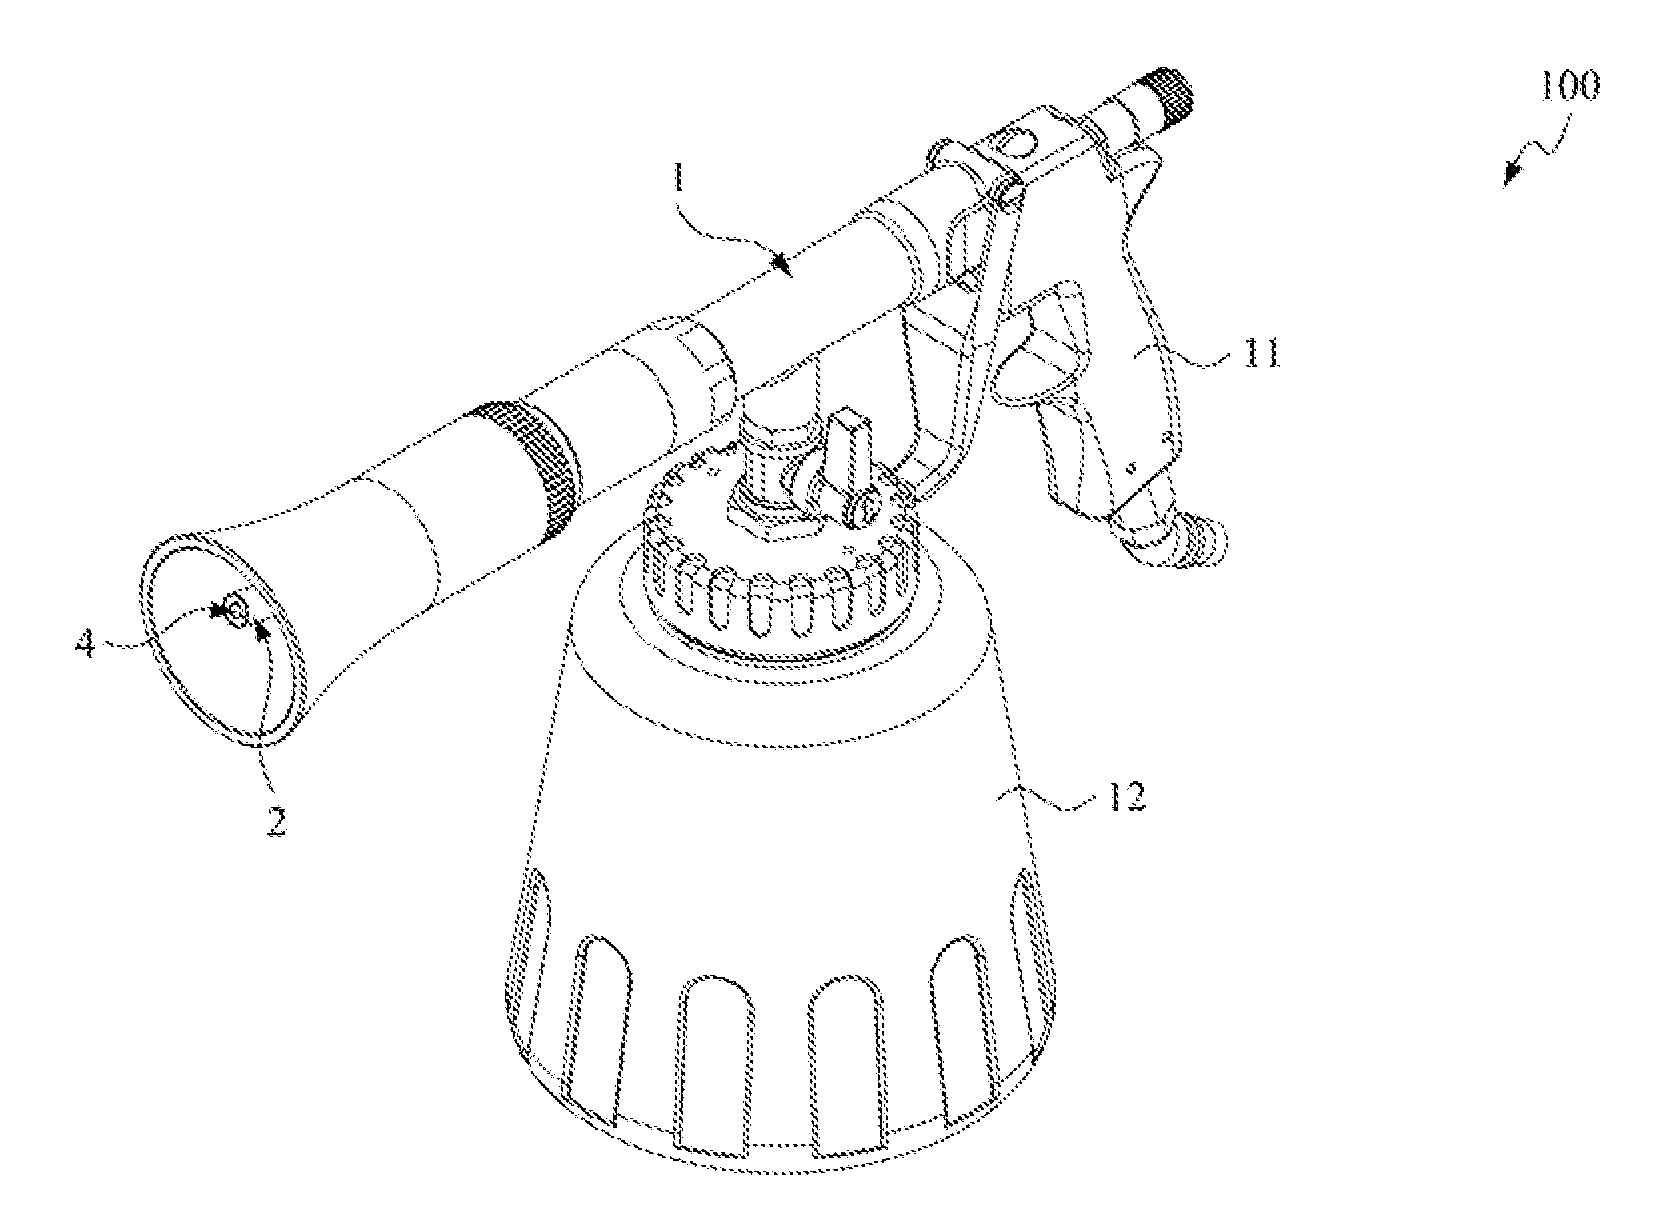 Rotary spraying device